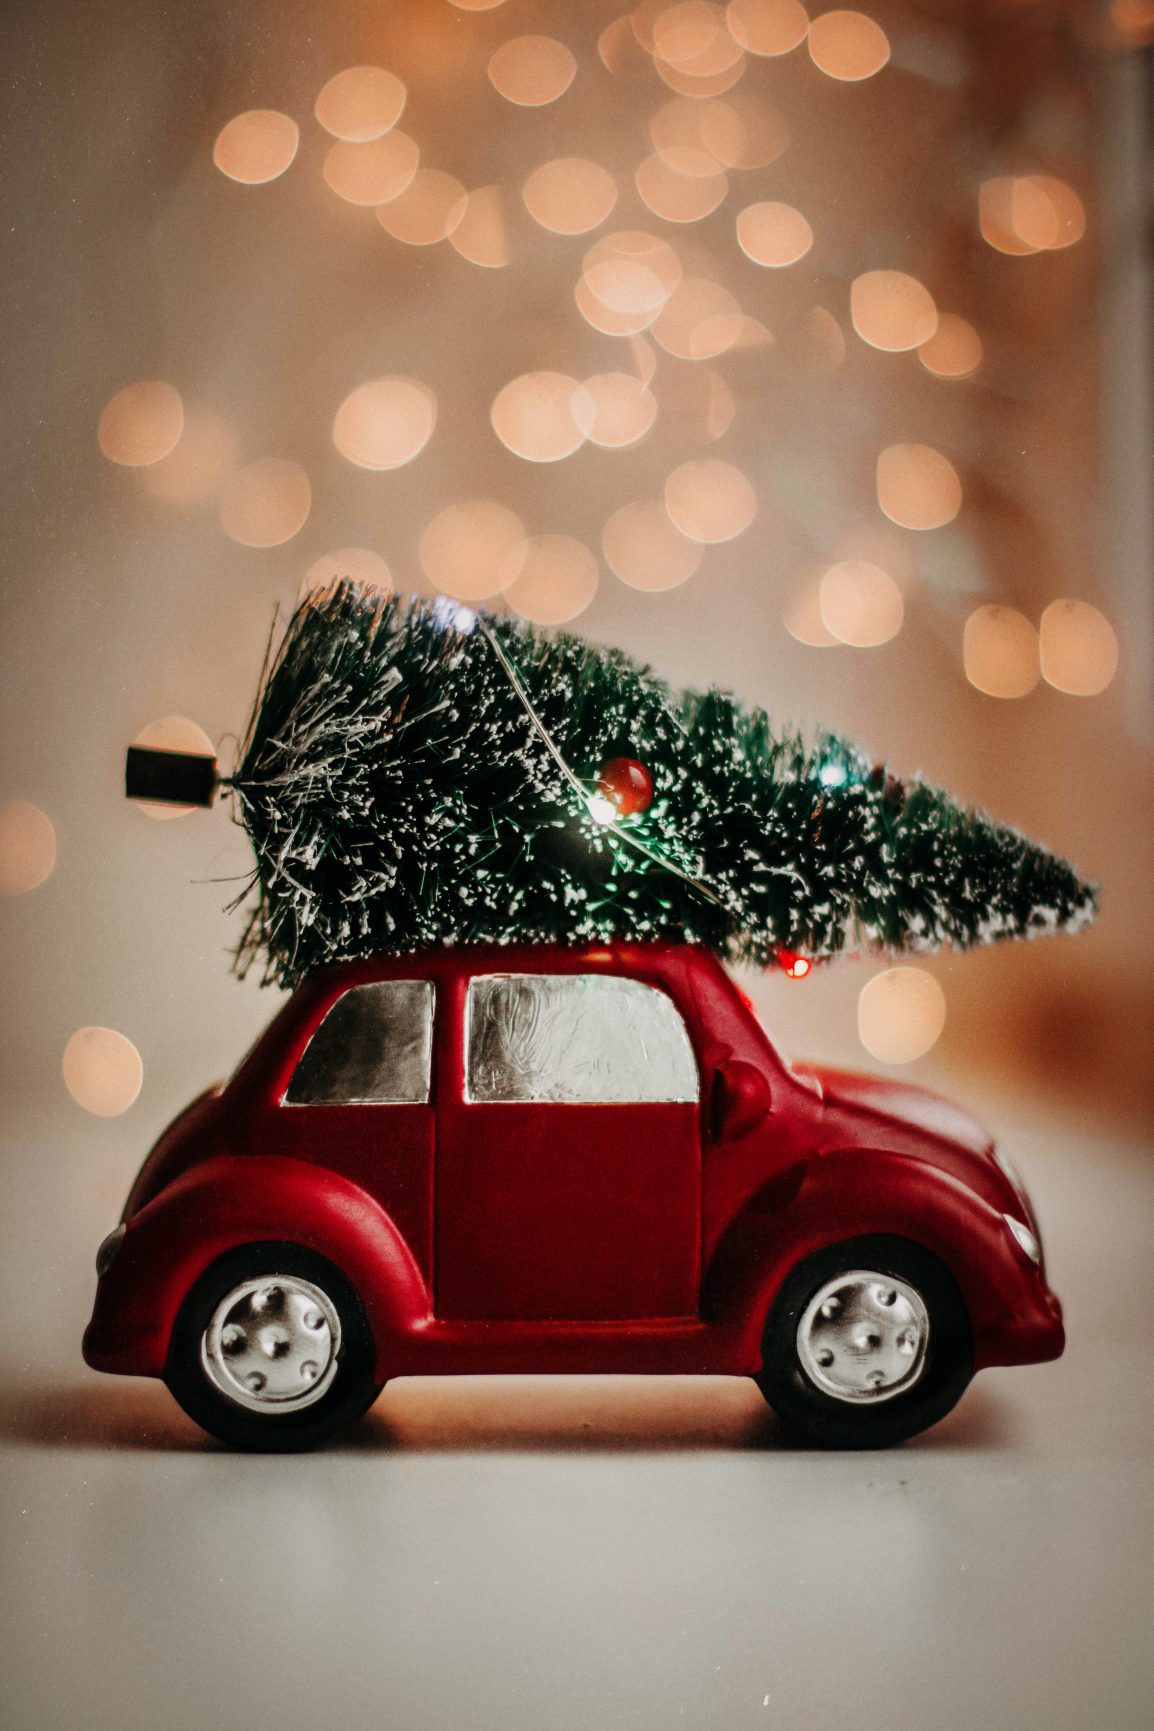 Car hauling a holiday tree